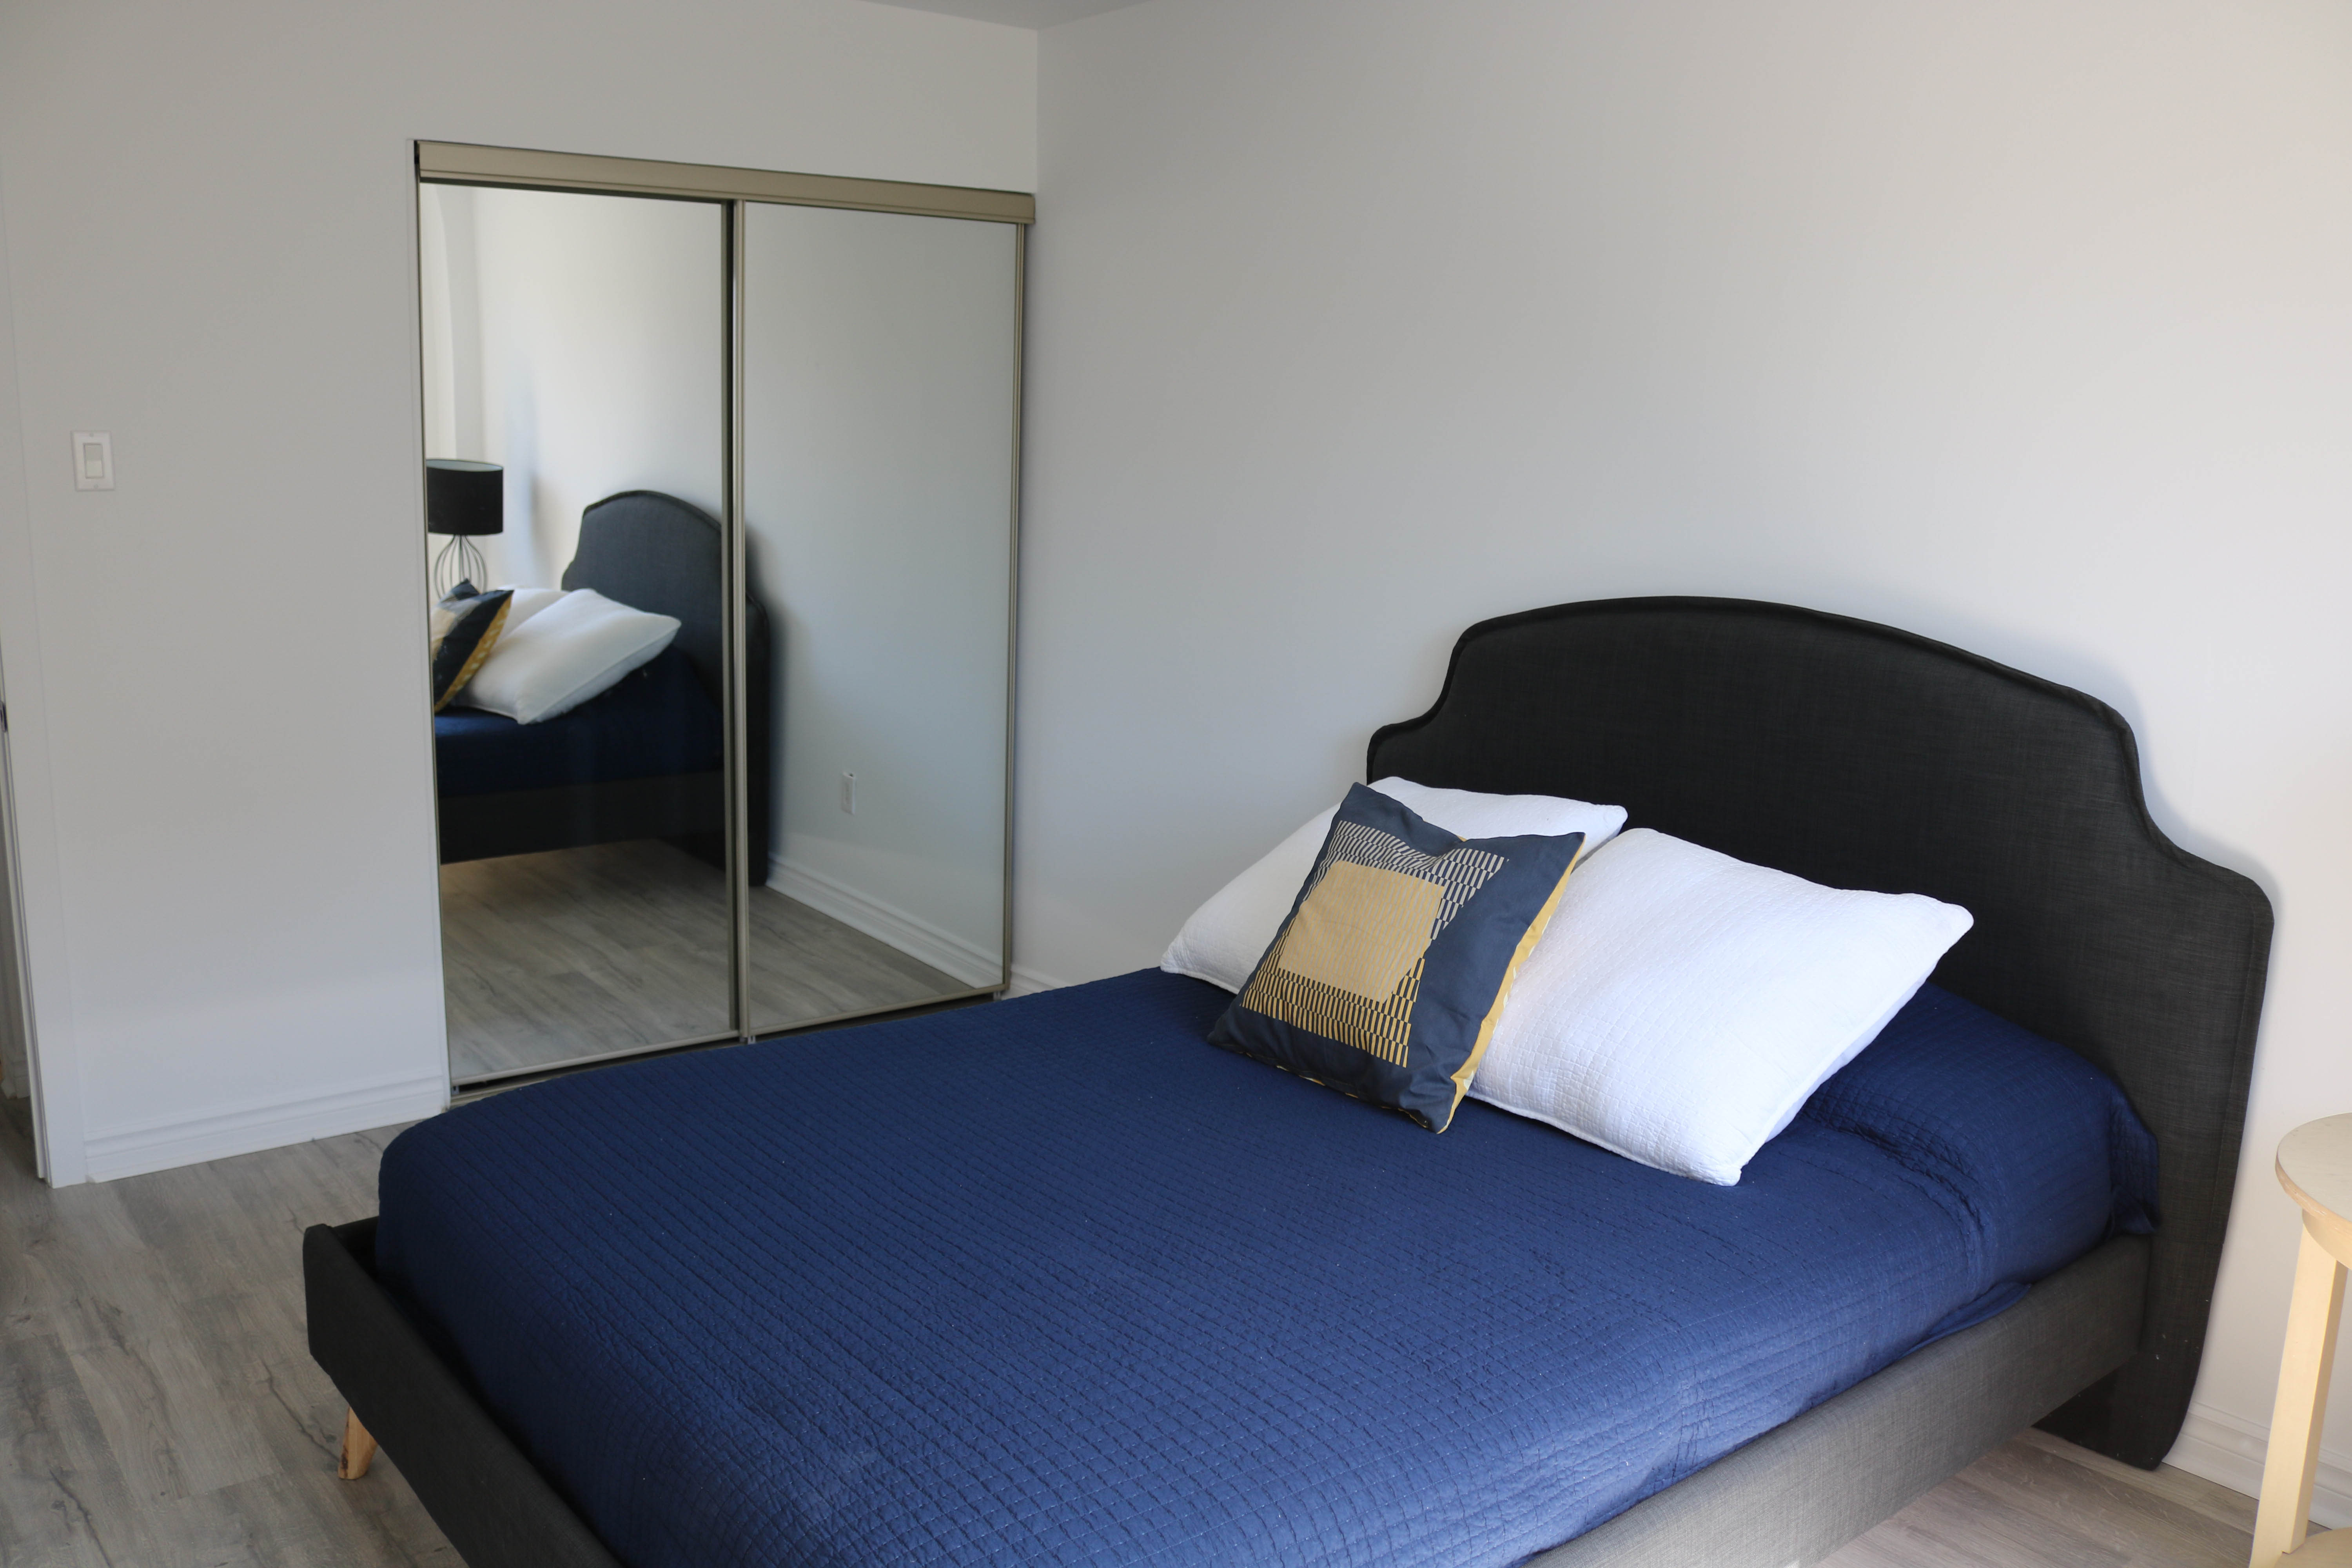 1 bedroom Apartments for rent in Dollard-des-Ormeaux at Place Fairview - Photo 03 - RentQuebecApartments – L404486